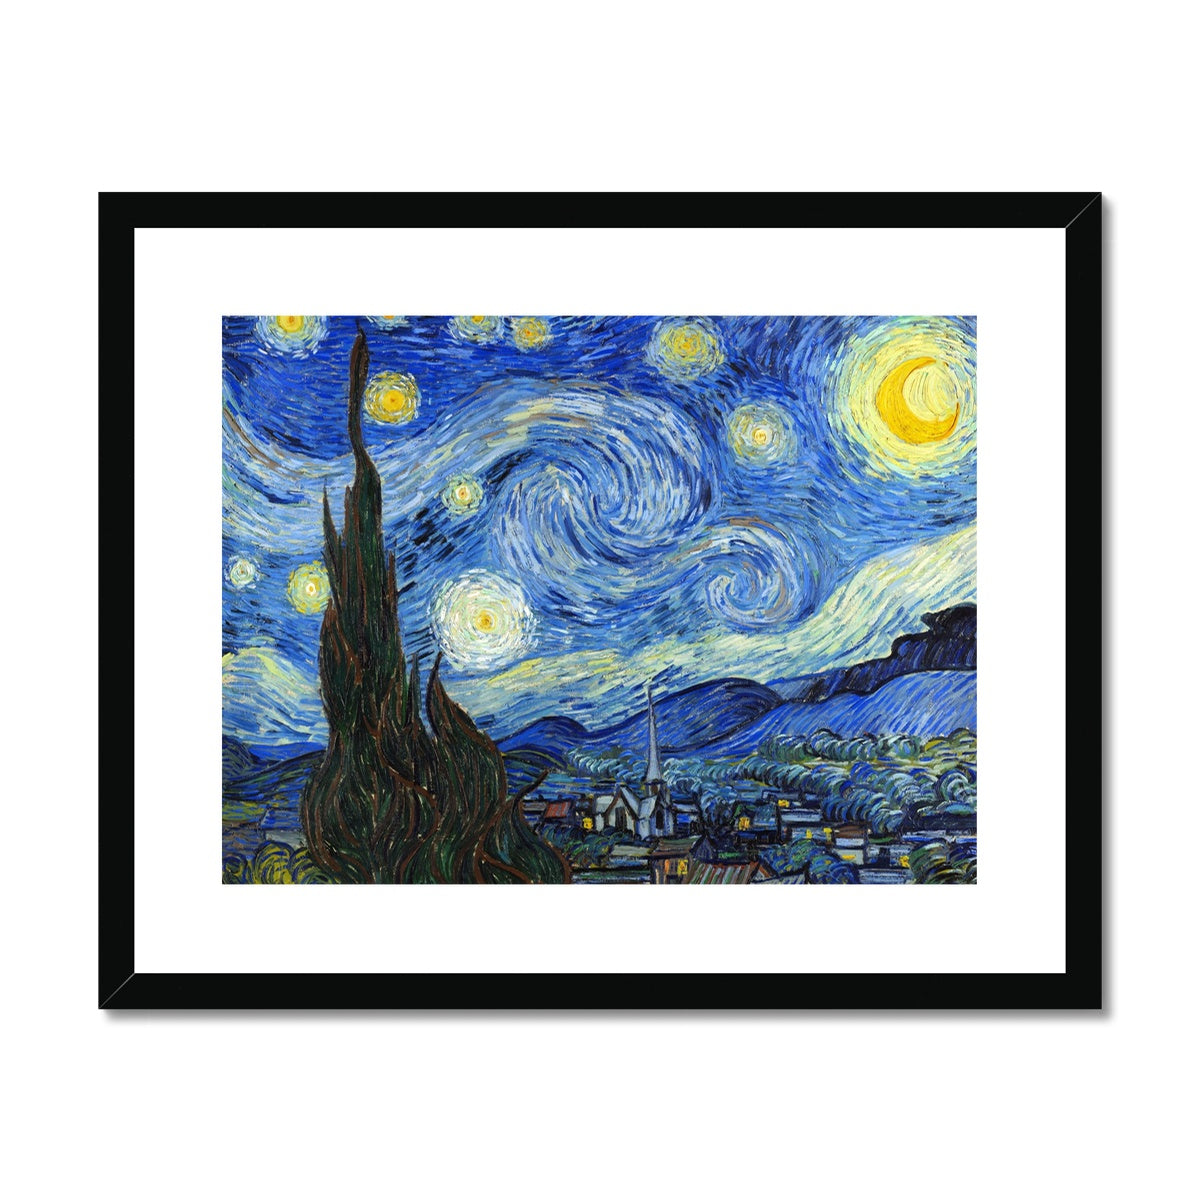 Vincent Van Gogh Framed Open Edition Art Print. 'Starry Night'. Art Gallery Historic Art